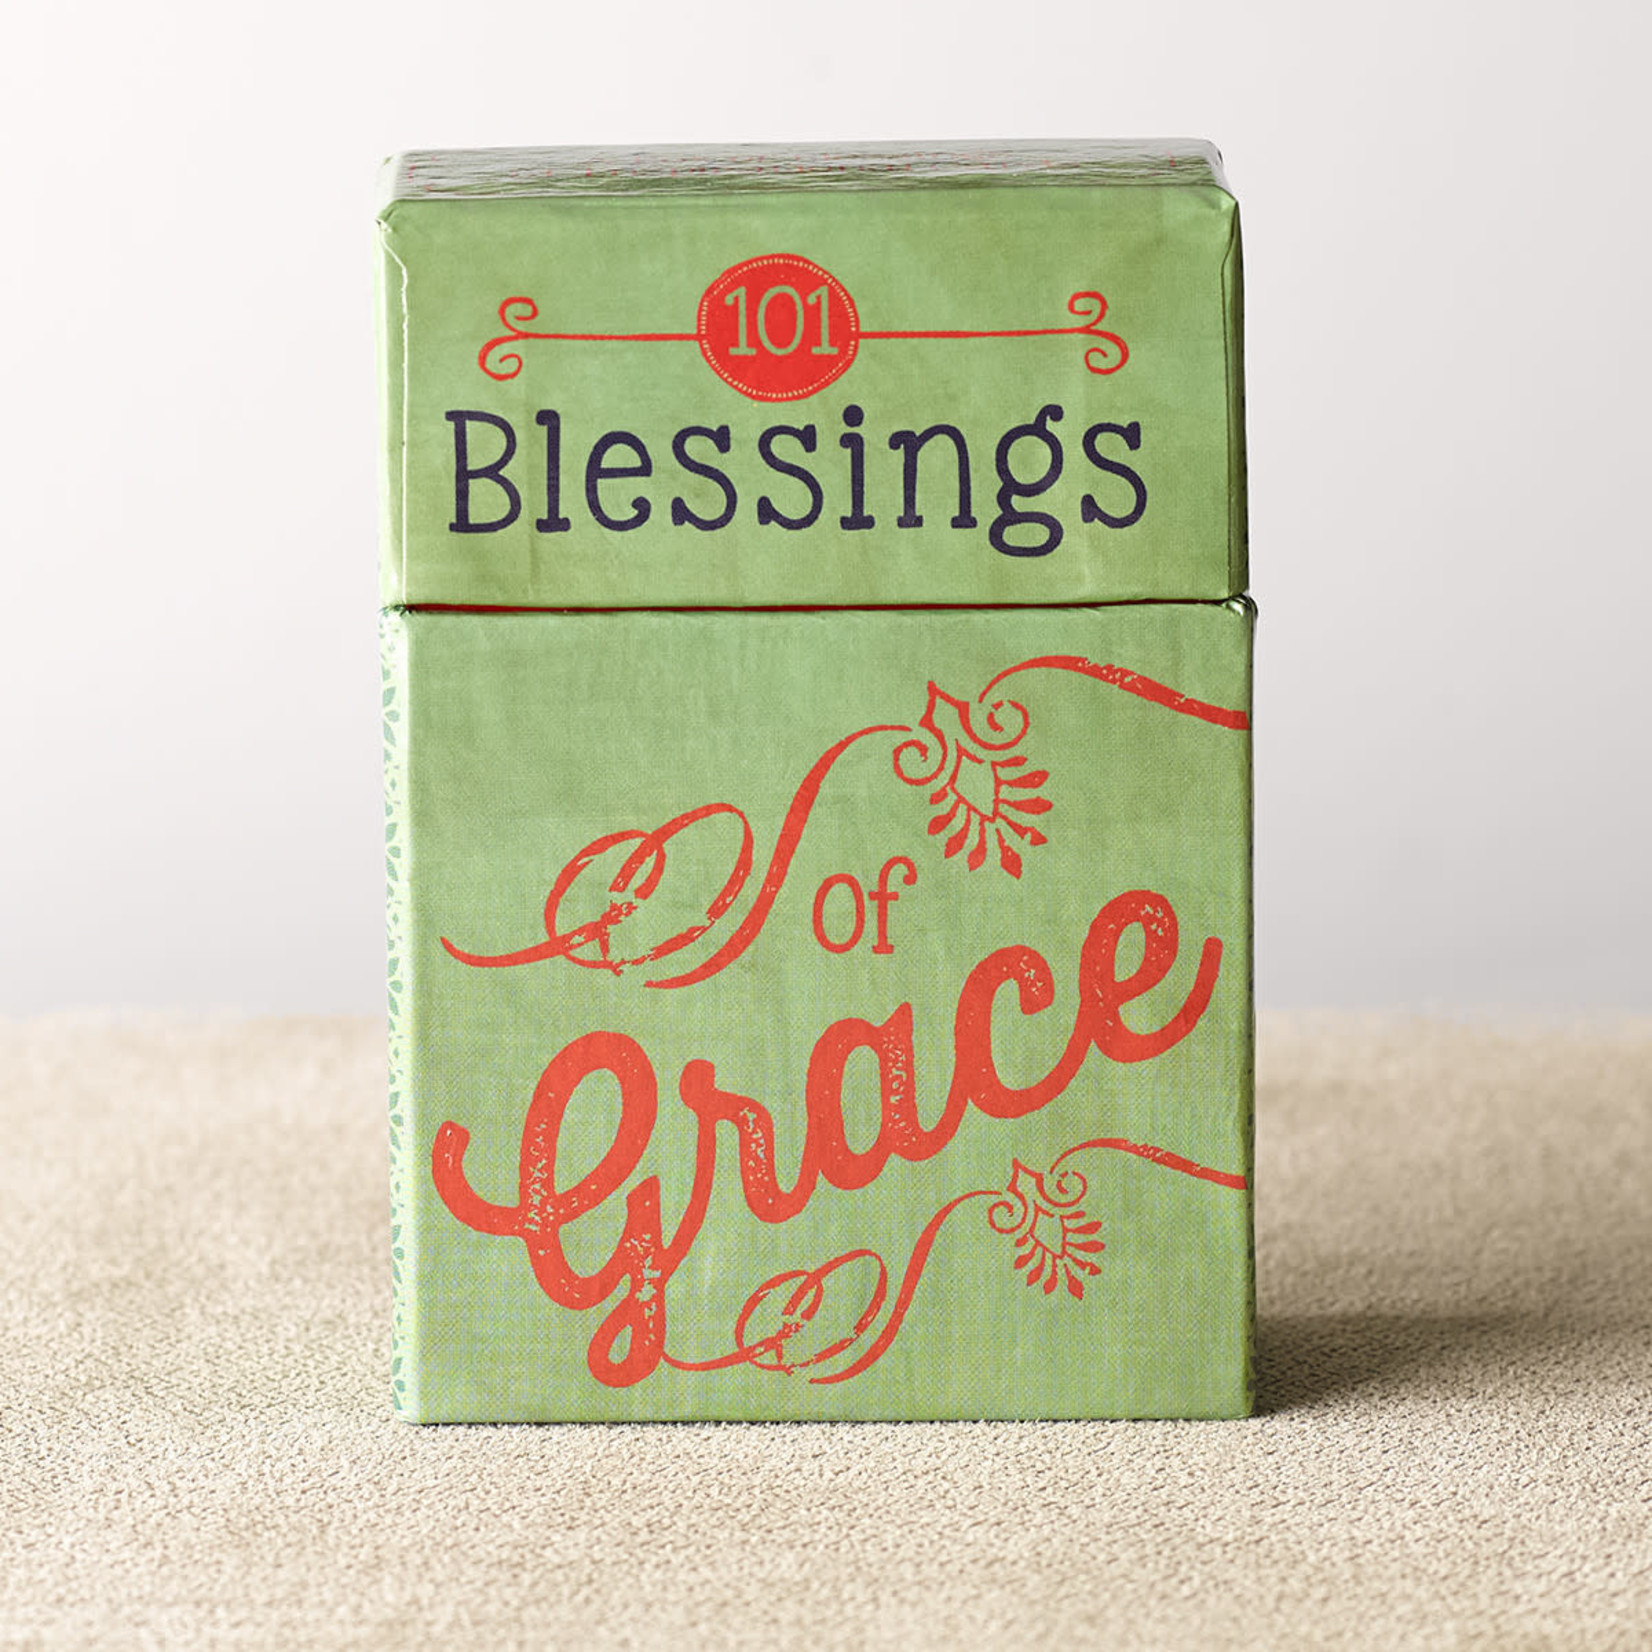 Christian Art Gifts 101 Blessings of Grace - Box of Blessings